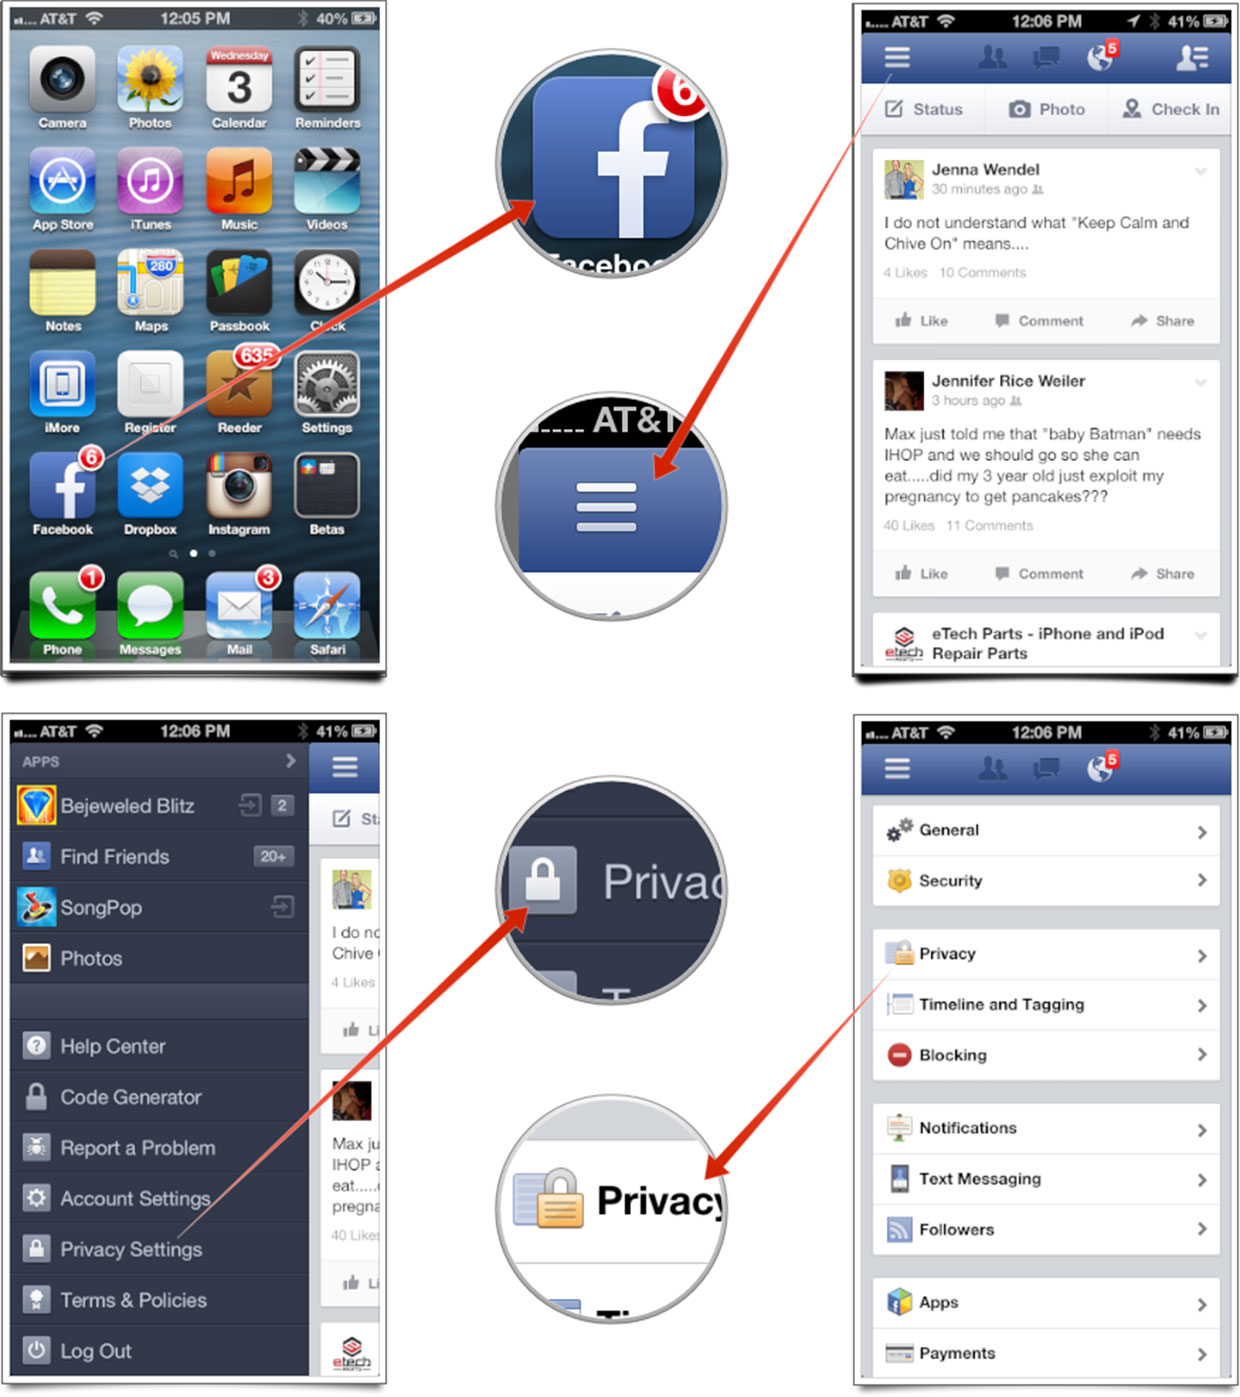 Edit privacy settings on Facebook app • Josh Benson